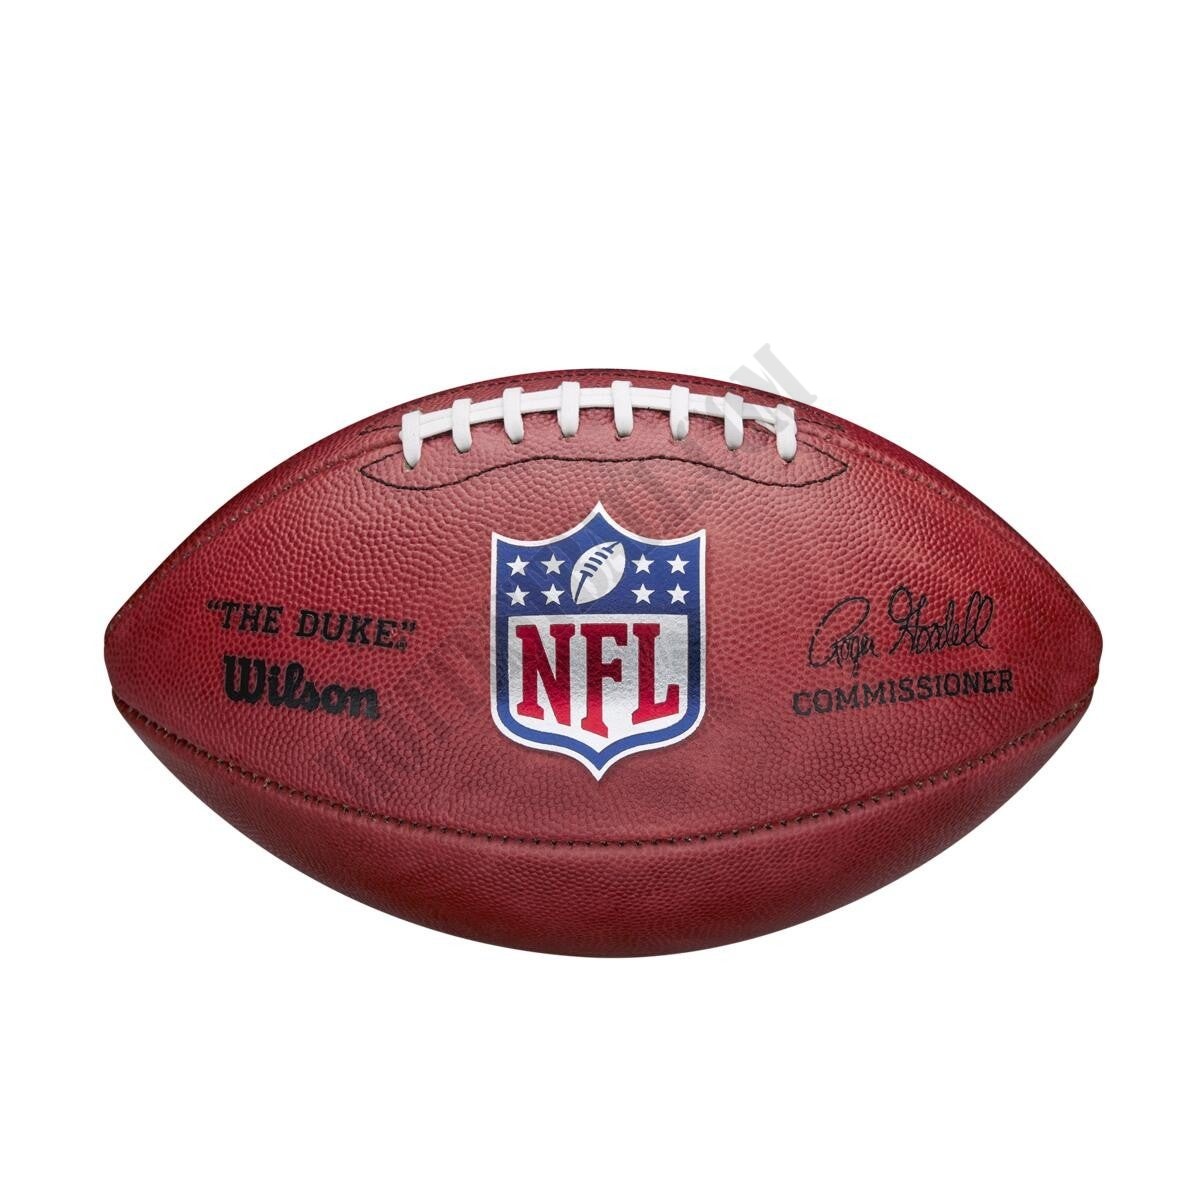 The Duke NFL Football ● Wilson Promotions - The Duke NFL Football ● Wilson Promotions